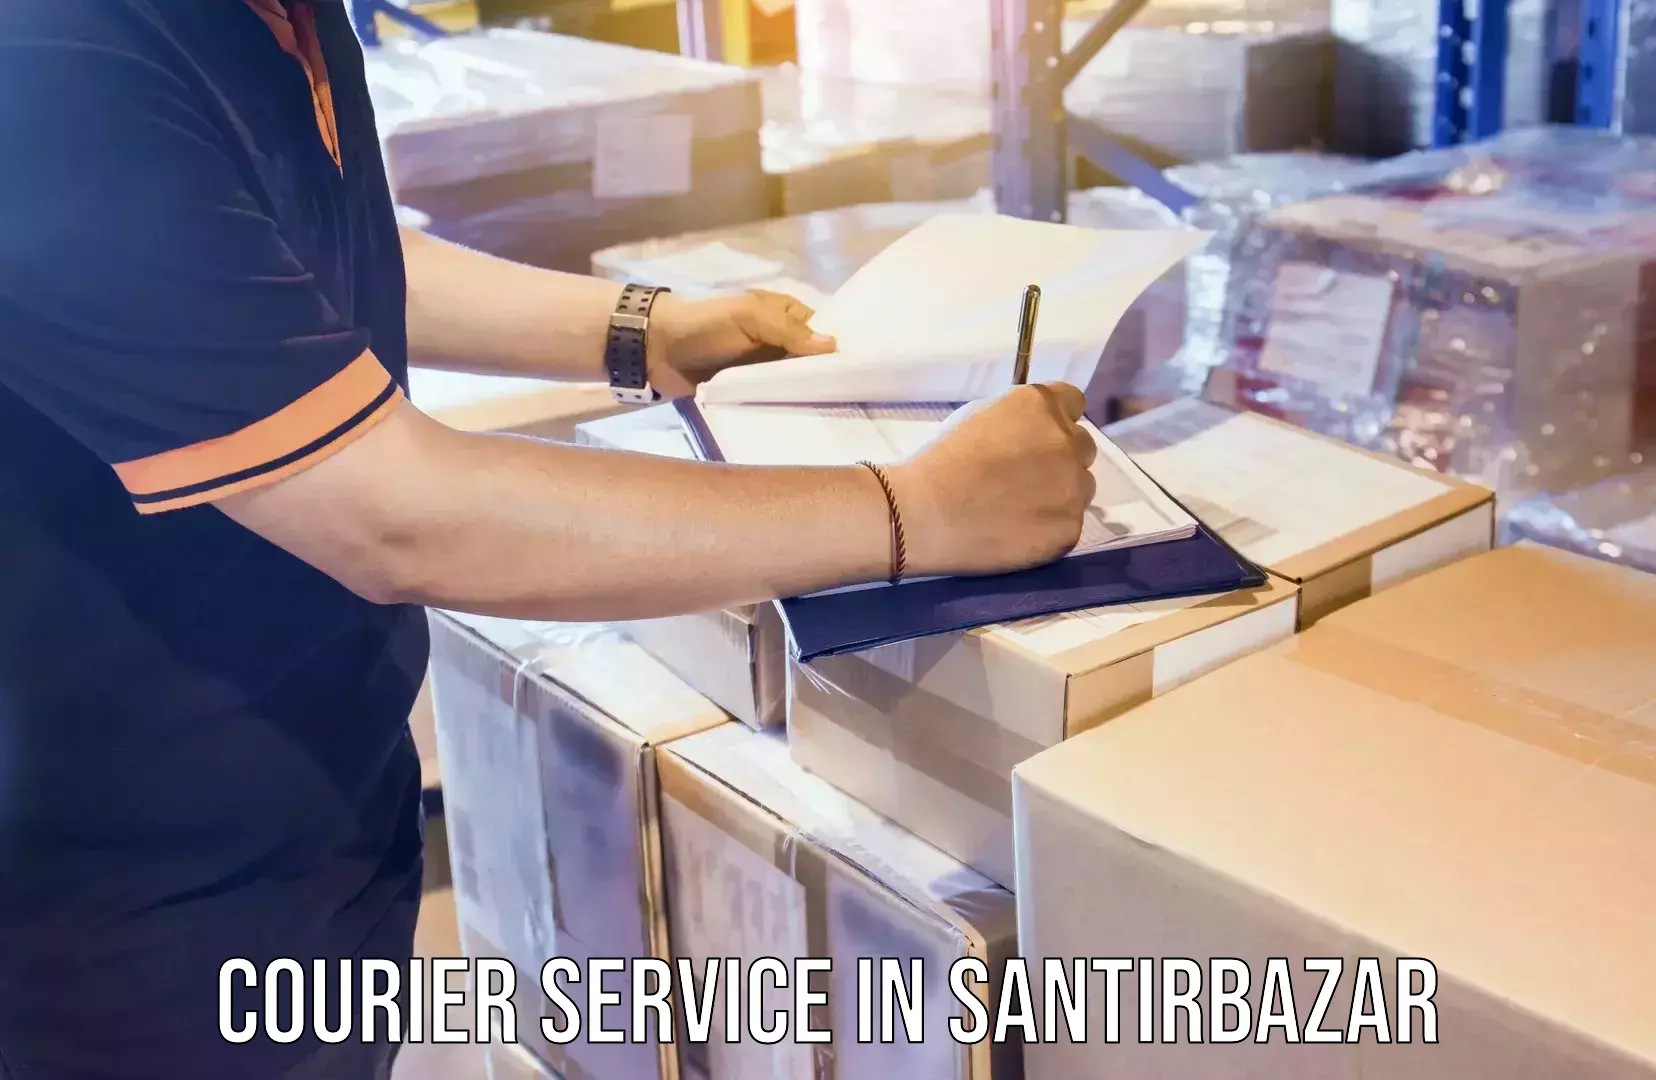 On-call courier service in Santirbazar